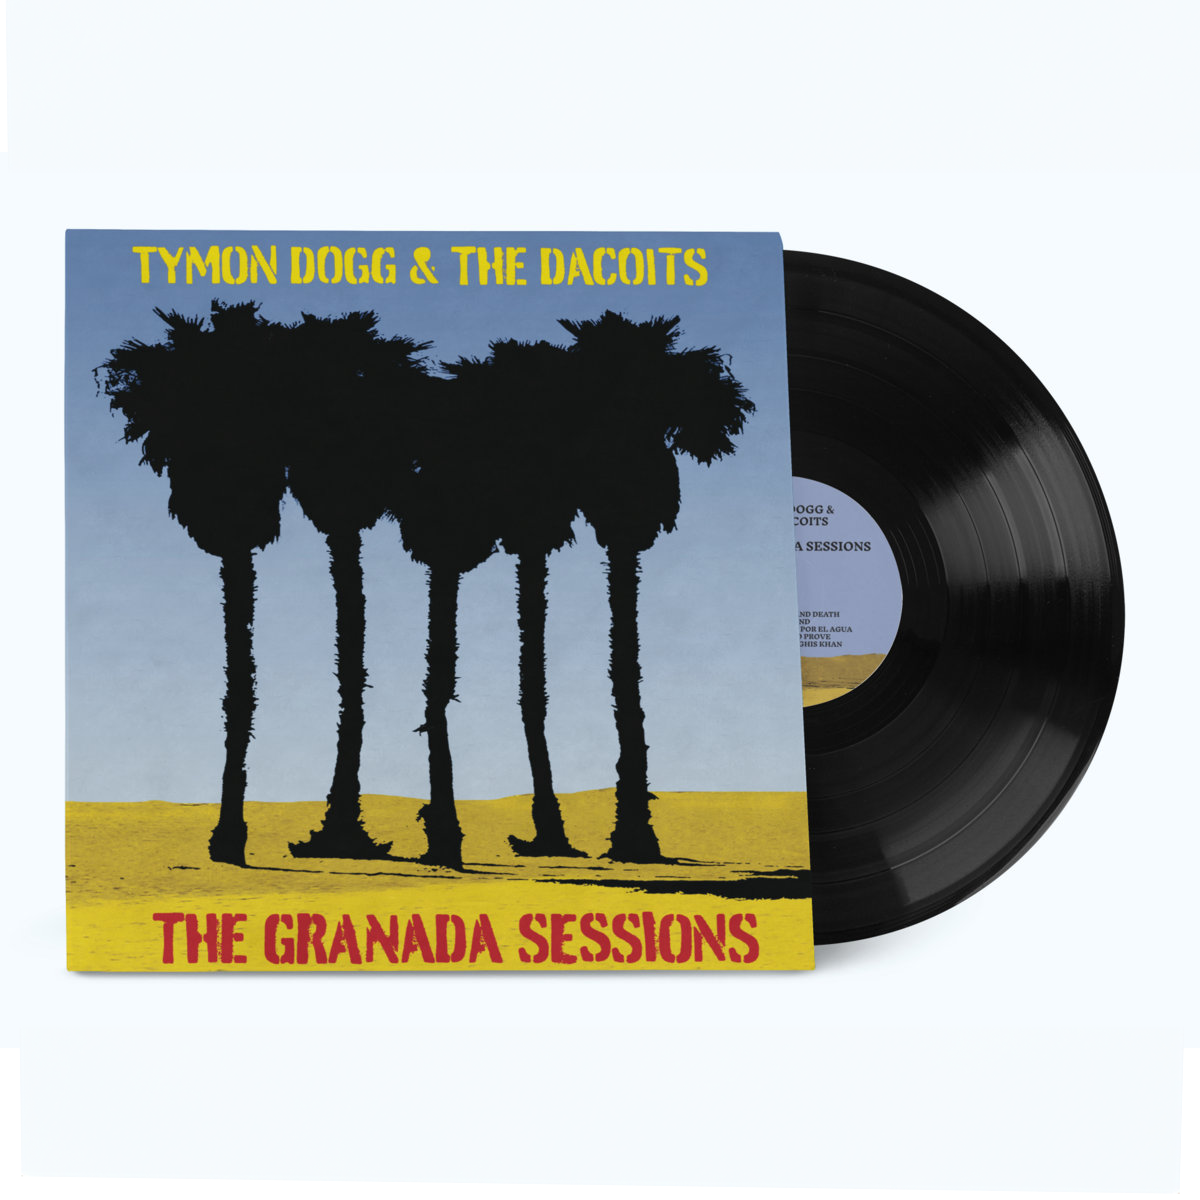 Tymon Dogg & the Dacoits - The Granada Sessions: Vinyl LP